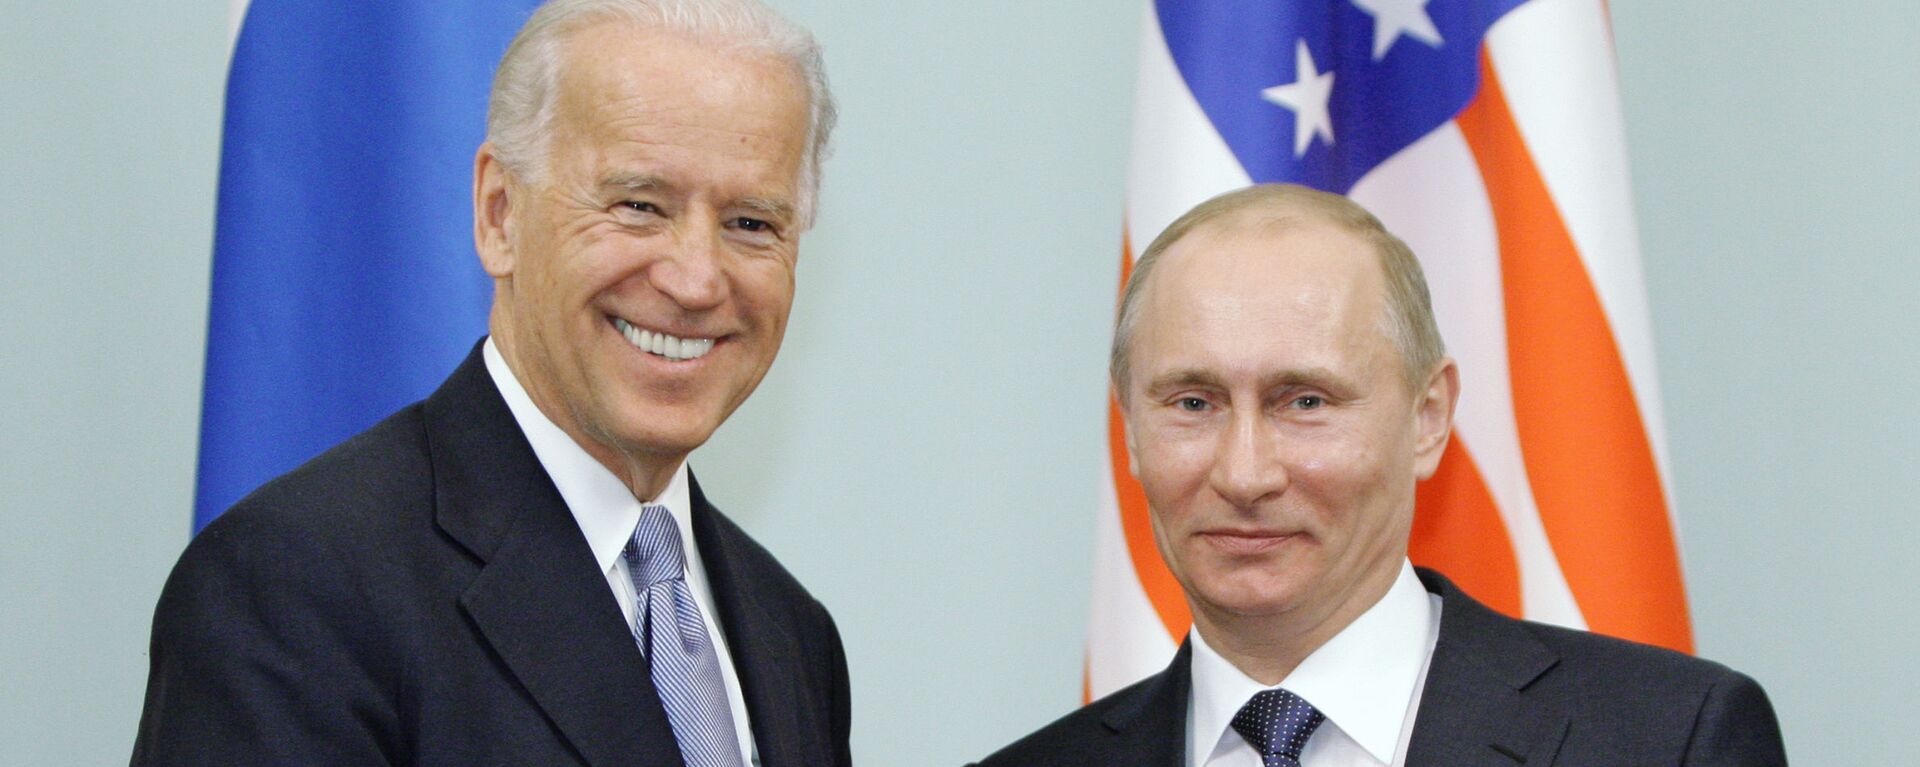 Joe Biden y Vladímir Putin en Rusia (archivo, año 2011) - Sputnik Mundo, 1920, 07.05.2021